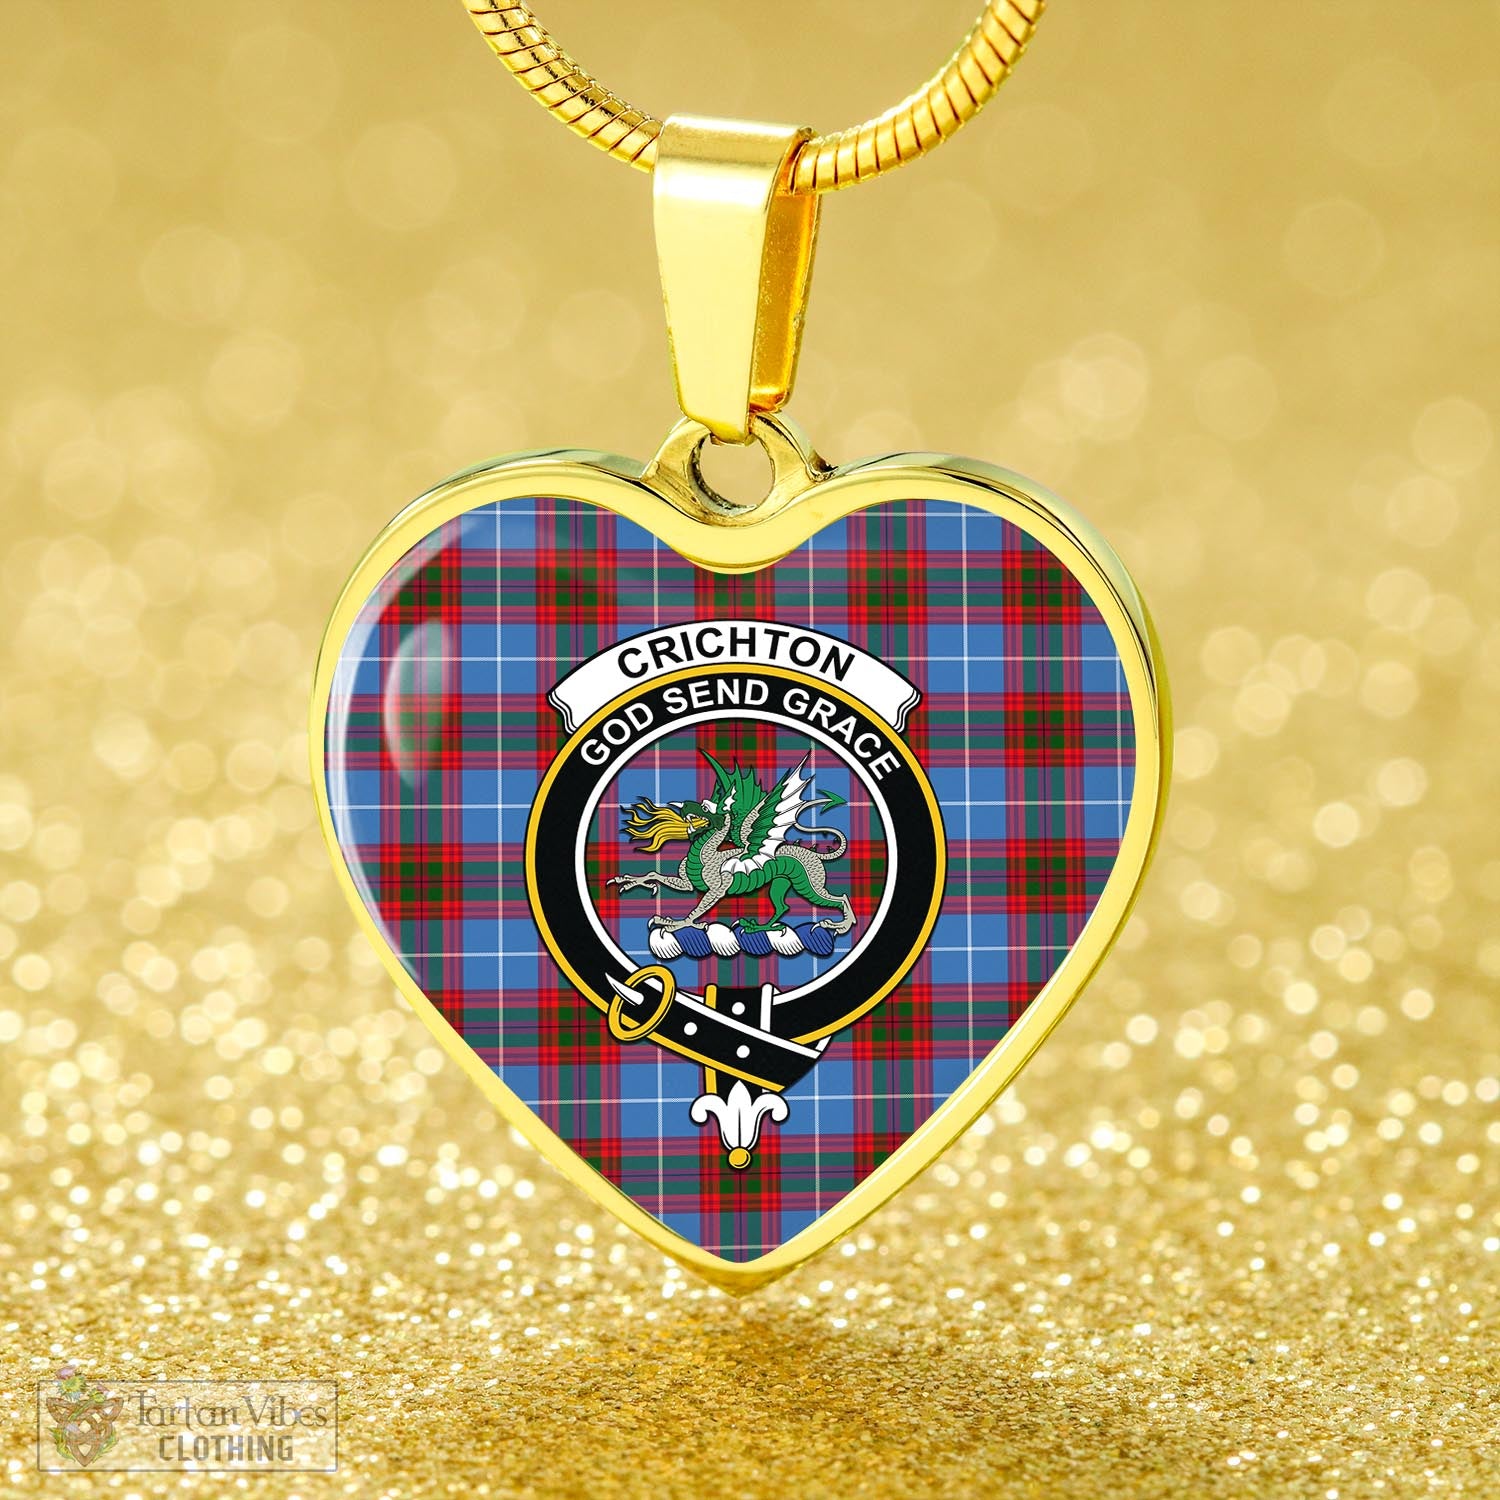 Tartan Vibes Clothing Crichton Tartan Heart Necklace with Family Crest